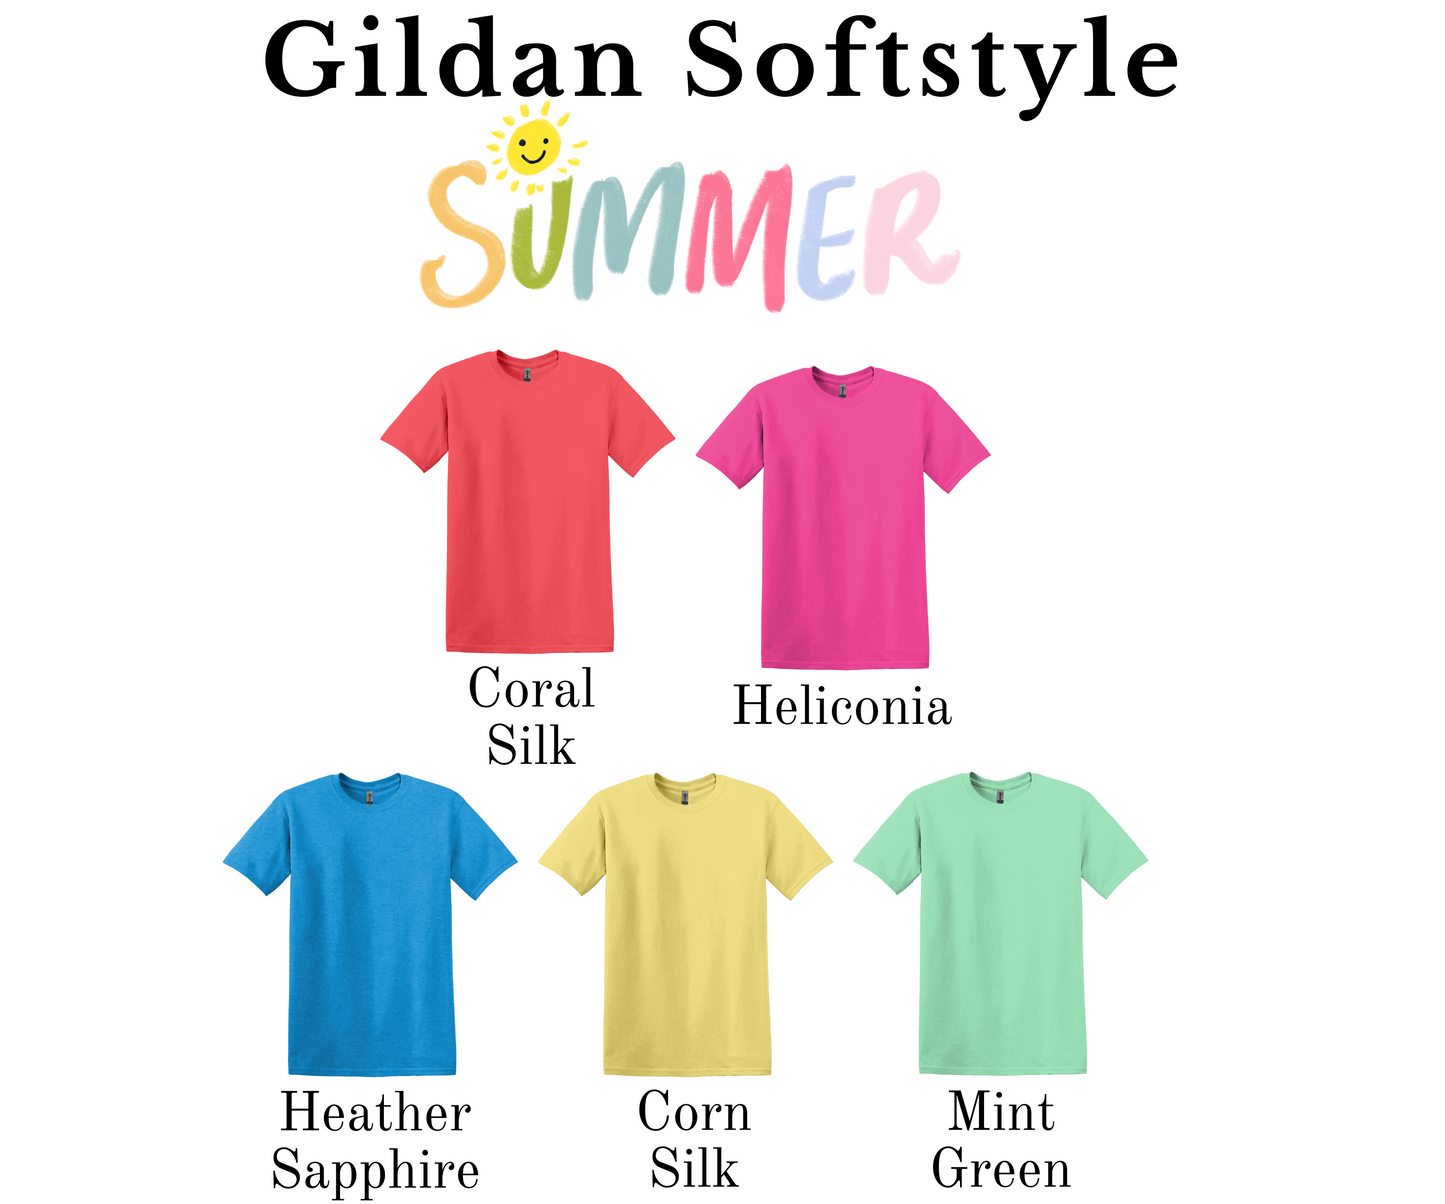 Arkansas Grunge Gildan Softstyle T-shirt or Sweatshirt